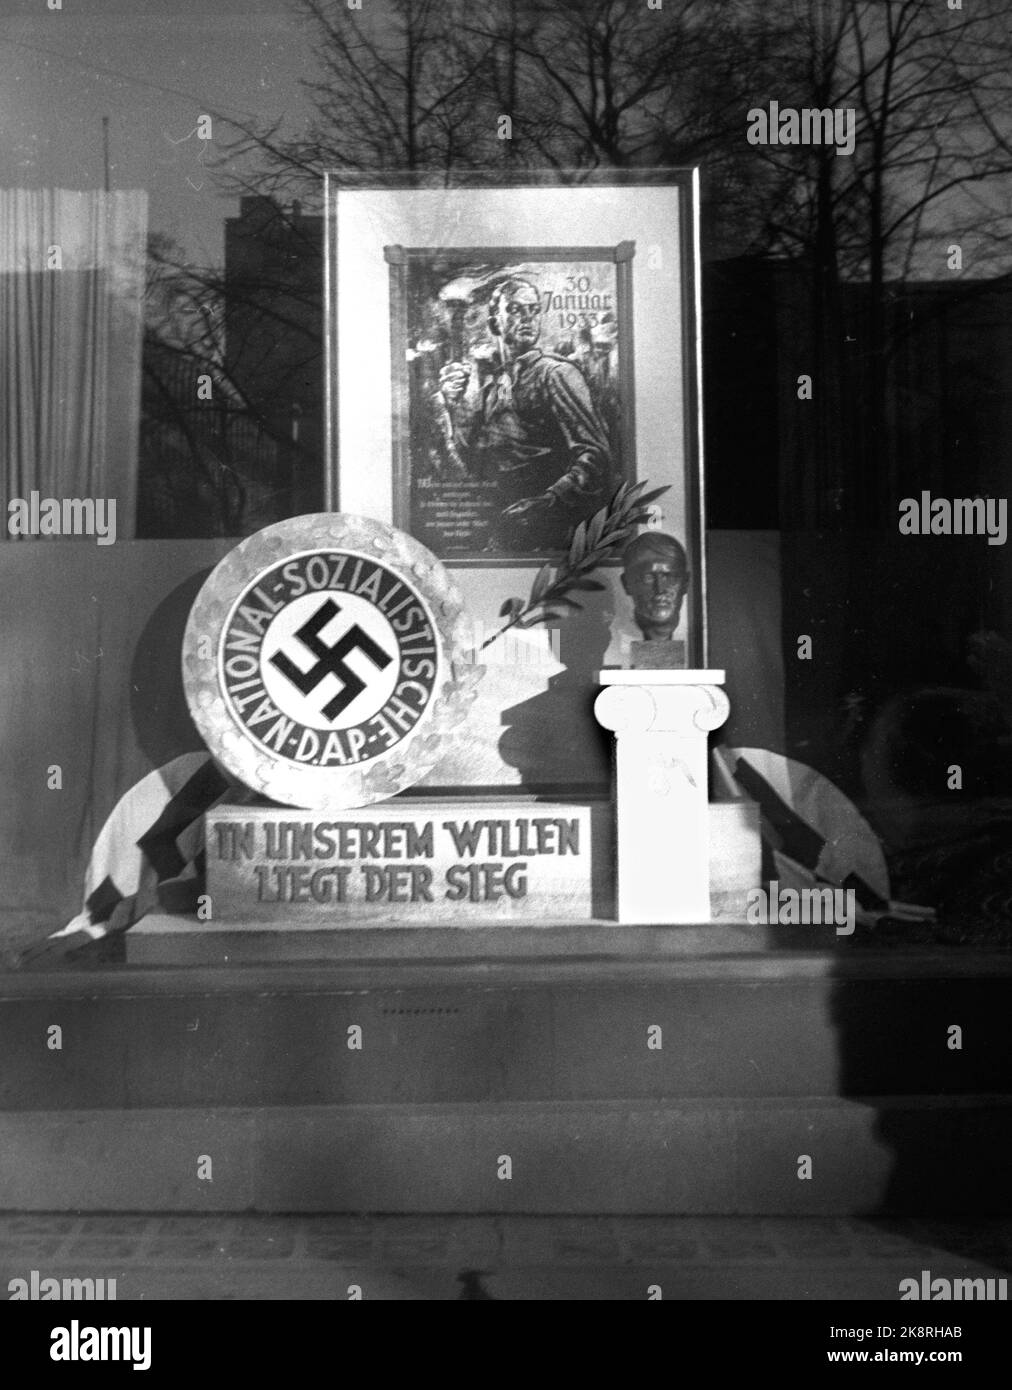 Oslo February 1944. In unserem Willen Liegt der Sieg. National Socialist propaganda. Chin cross. Photo: Nikk / NTB  *** Photo not image processed **** Stock Photo